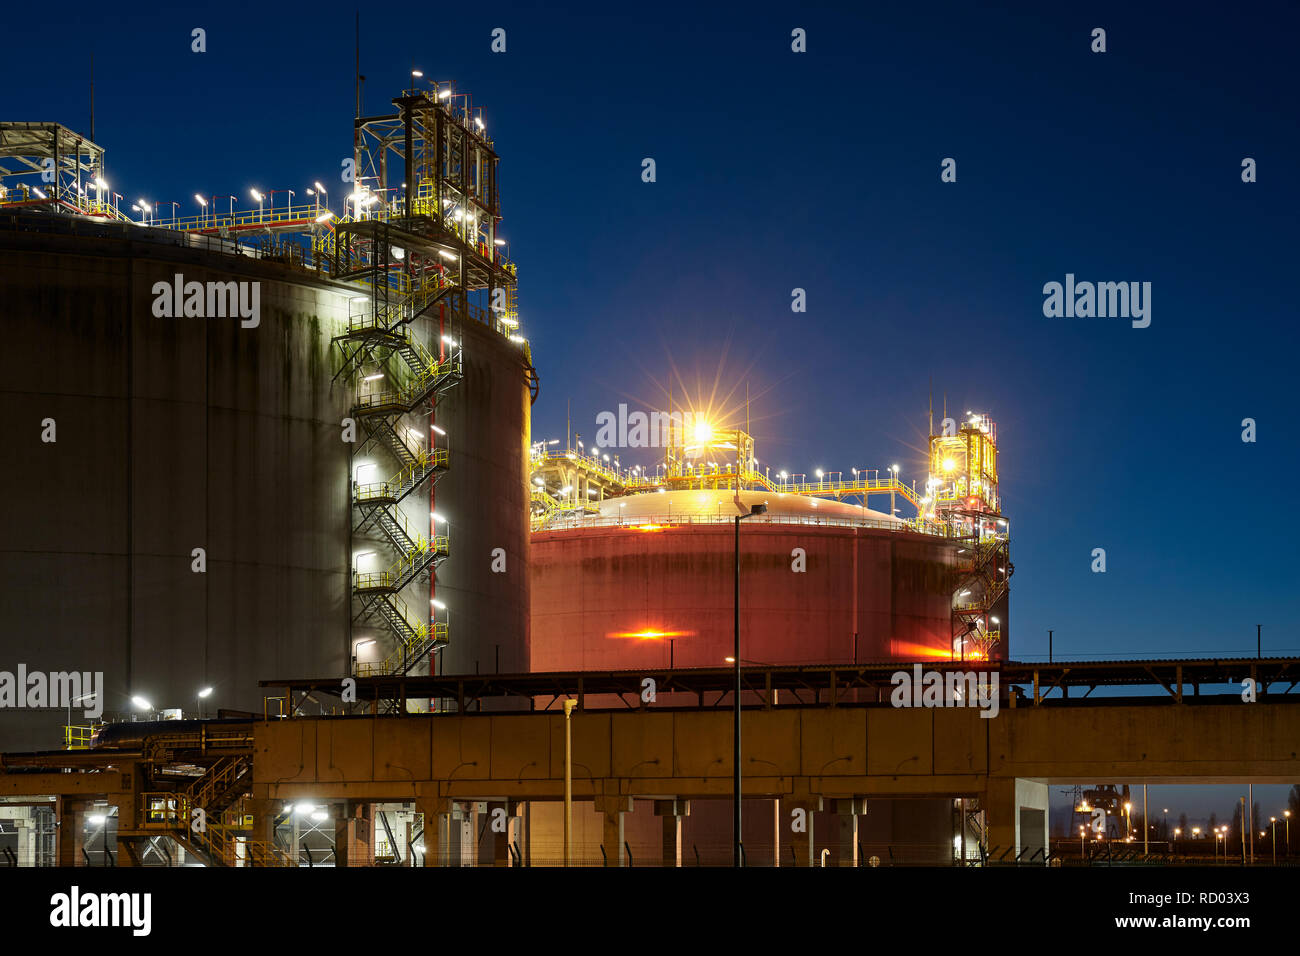 Liquefied natural gas (LNG) storage tanks at night. Stock Photo